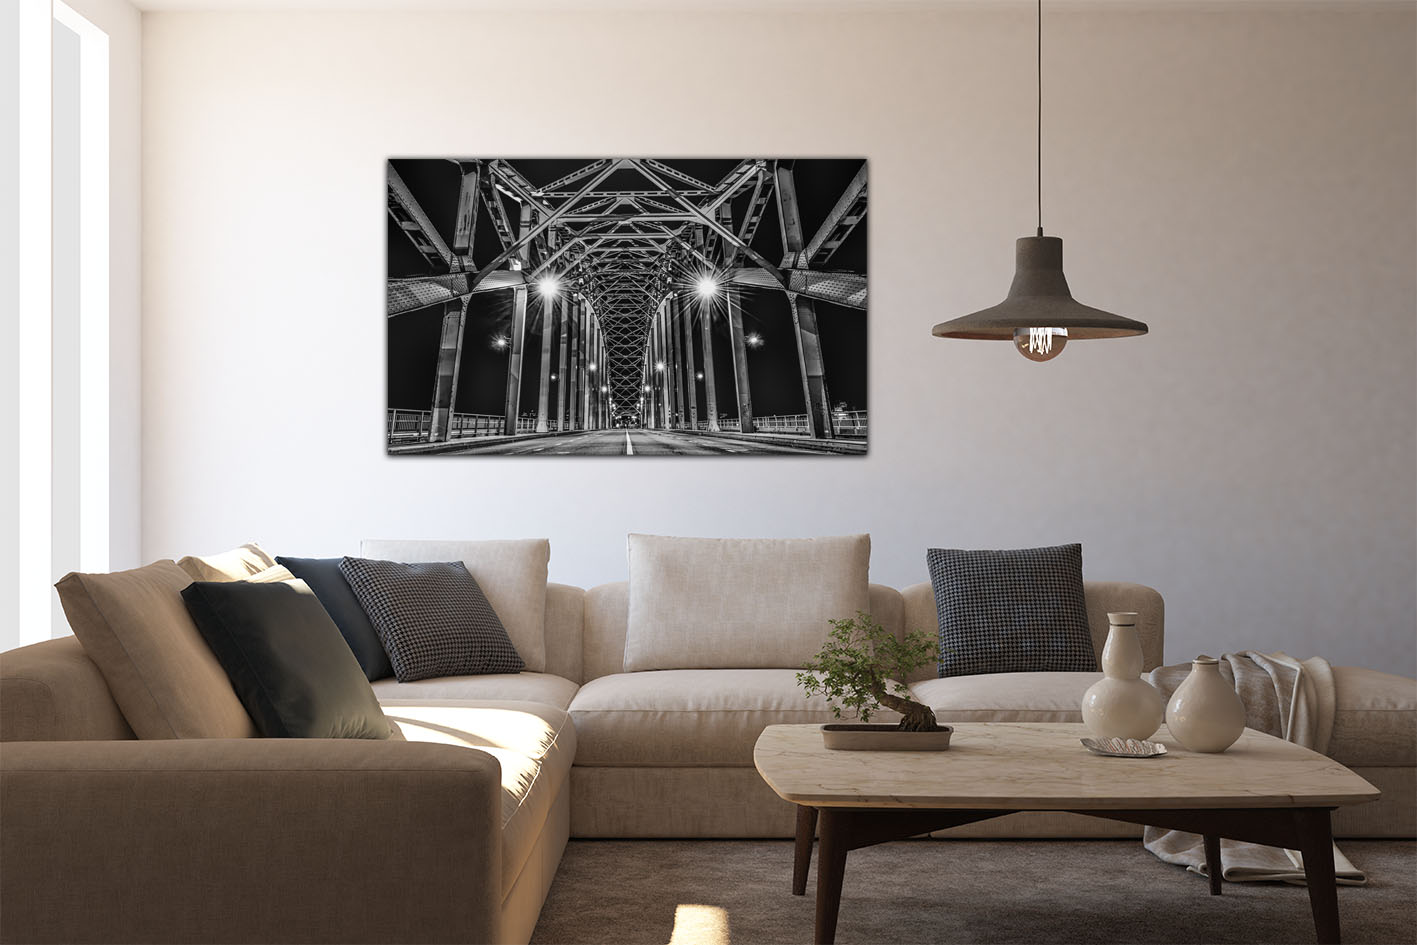 Under the Bridge - B-artphotography